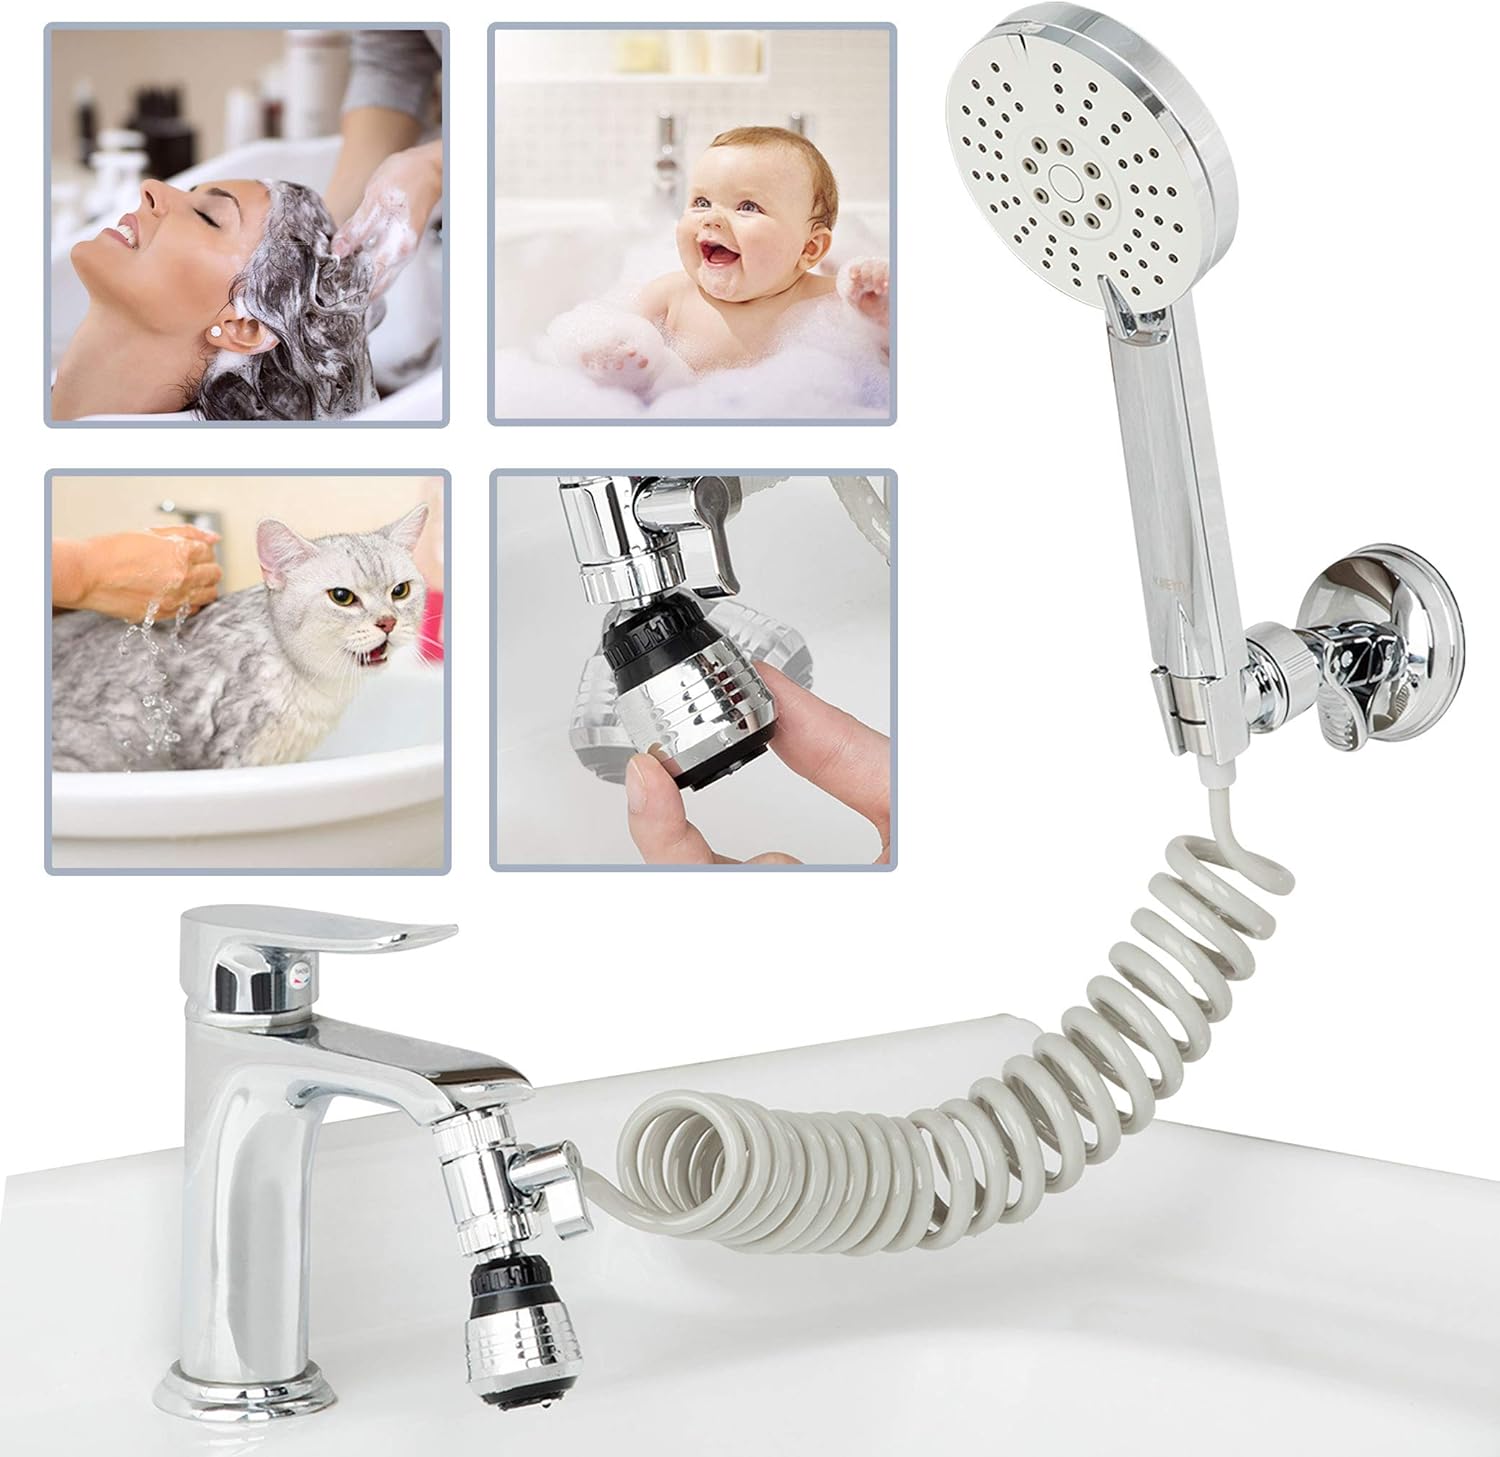 Klleyna Sink Sprayer Faucet Hose, Hand Shower Attachment For Bathtub